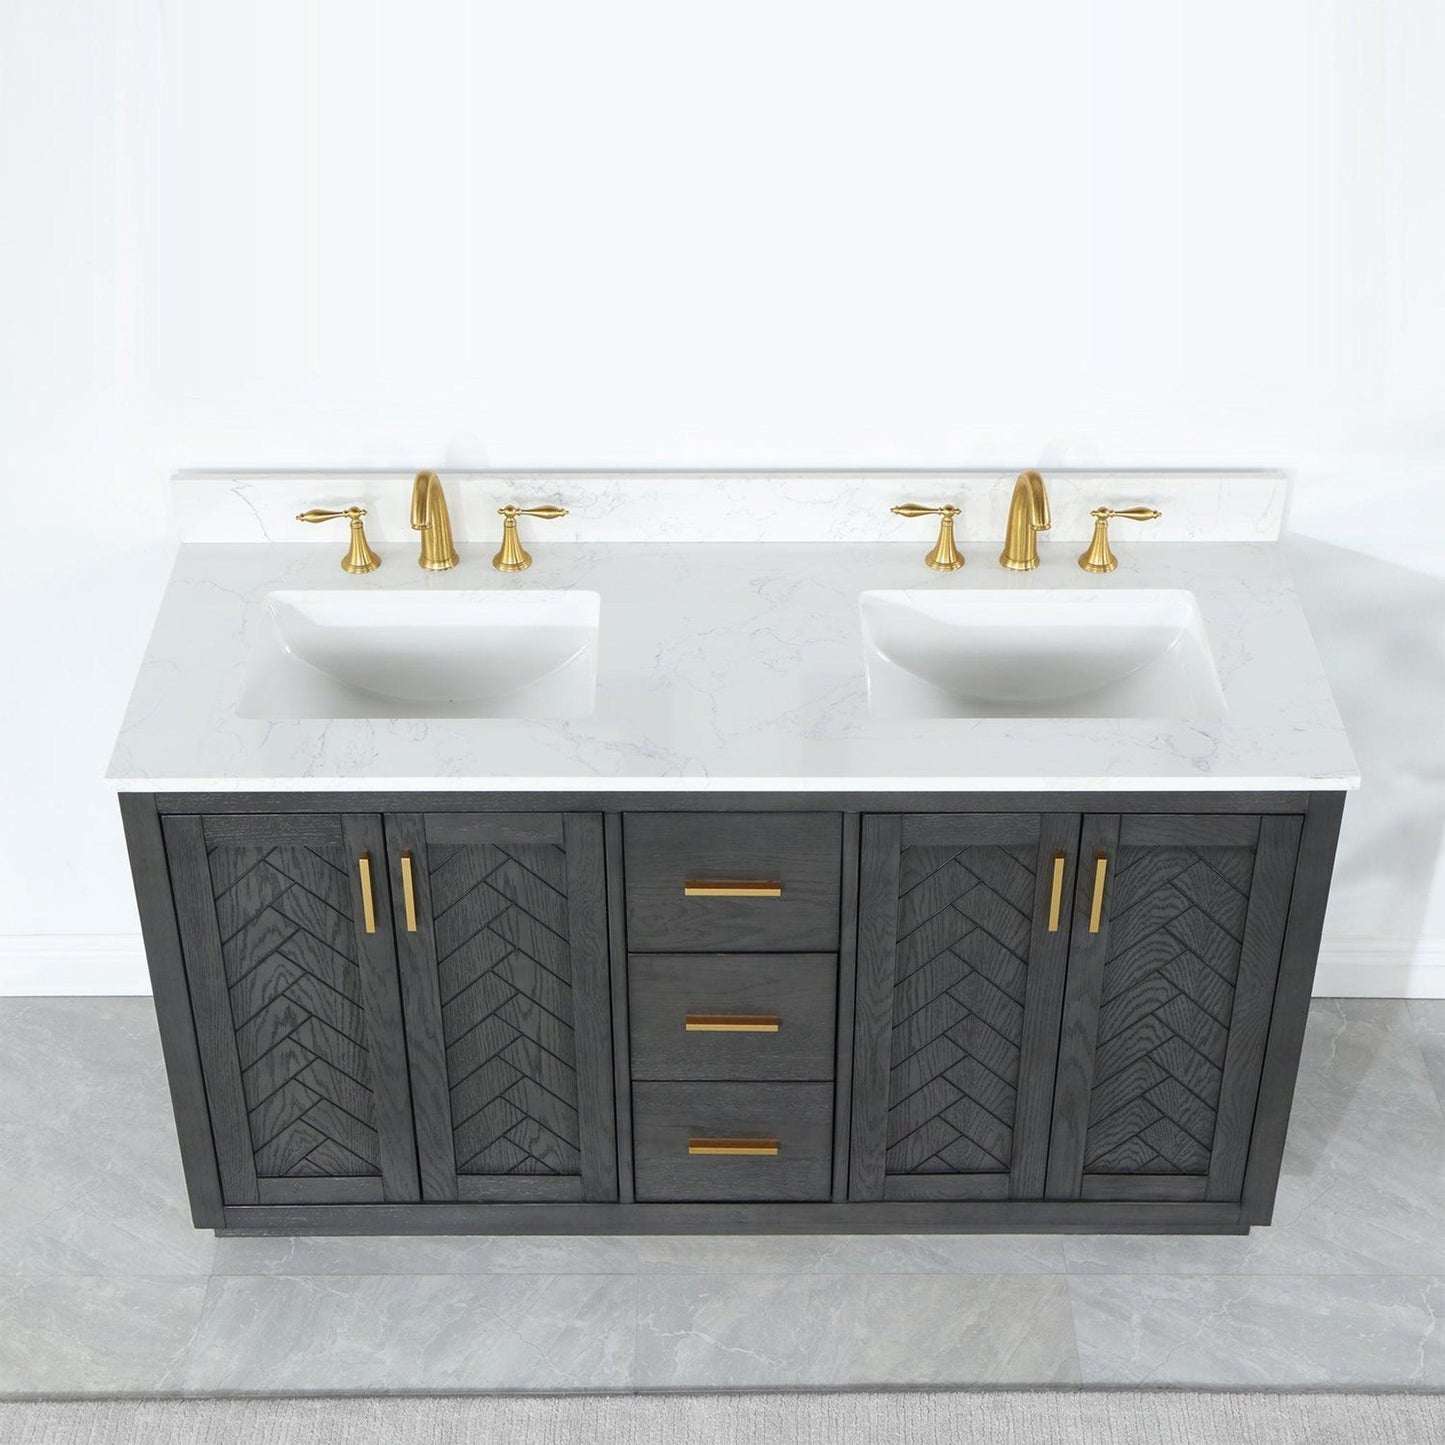 Altair Gazsi 60" Brown Oak Freestanding Double Bathroom Vanity Set With Elegant Composite Grain White Stone Top, Two Rectangular Undermount Ceramic Sinks, Overflow, and Backsplash